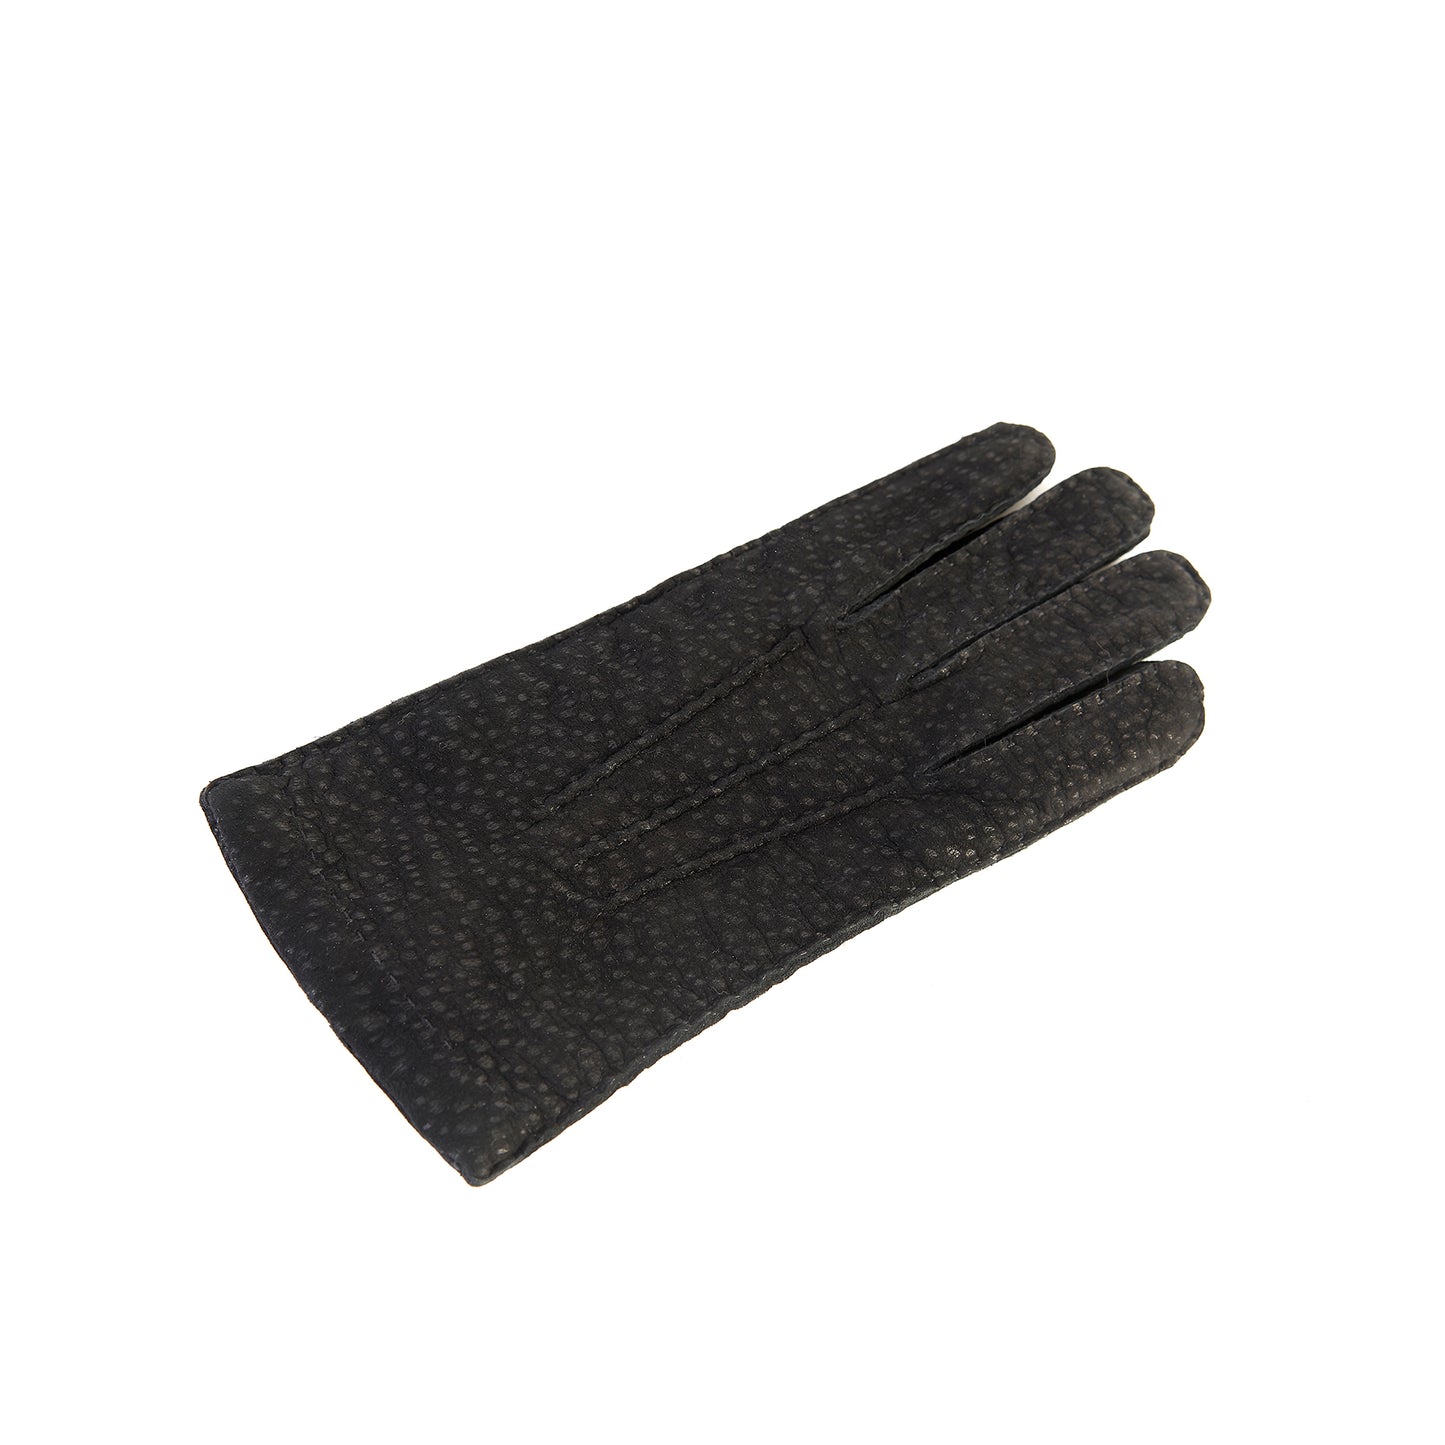 Men's hand-stitched black carpincho gloves cashmere lined